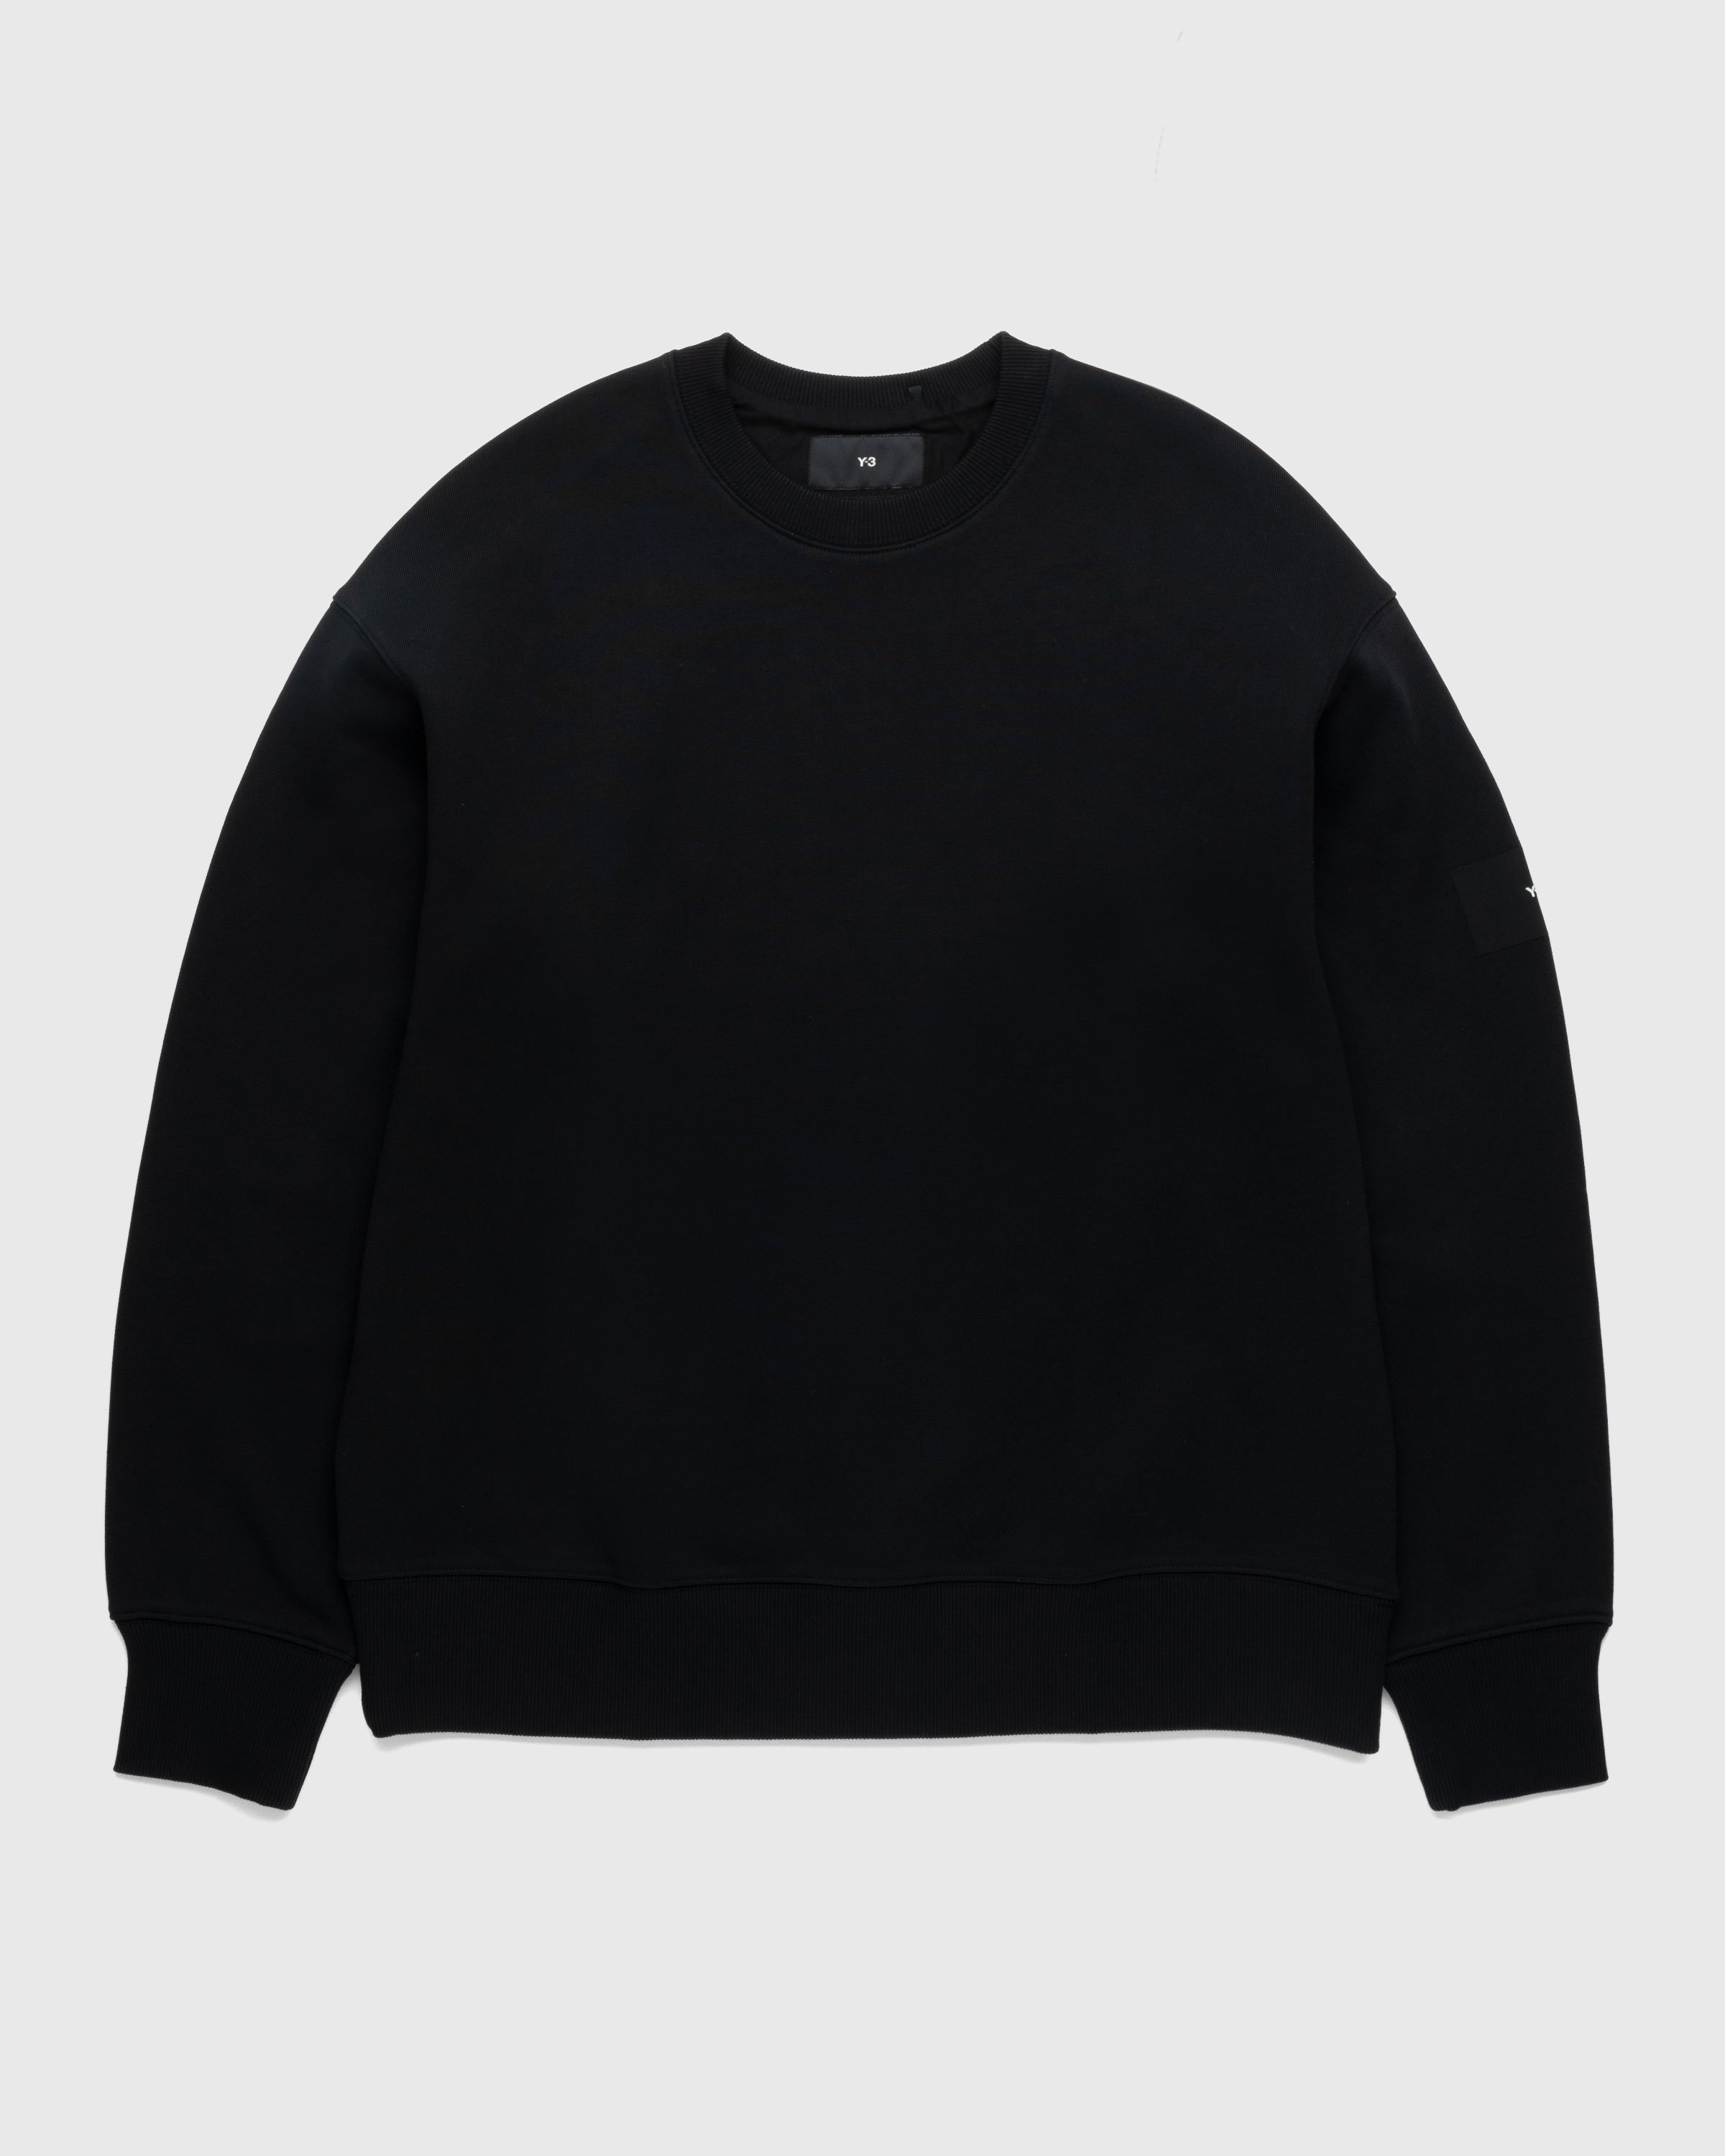 Y-3 – FT Crew Sweatshirt Black | Highsnobiety Shop